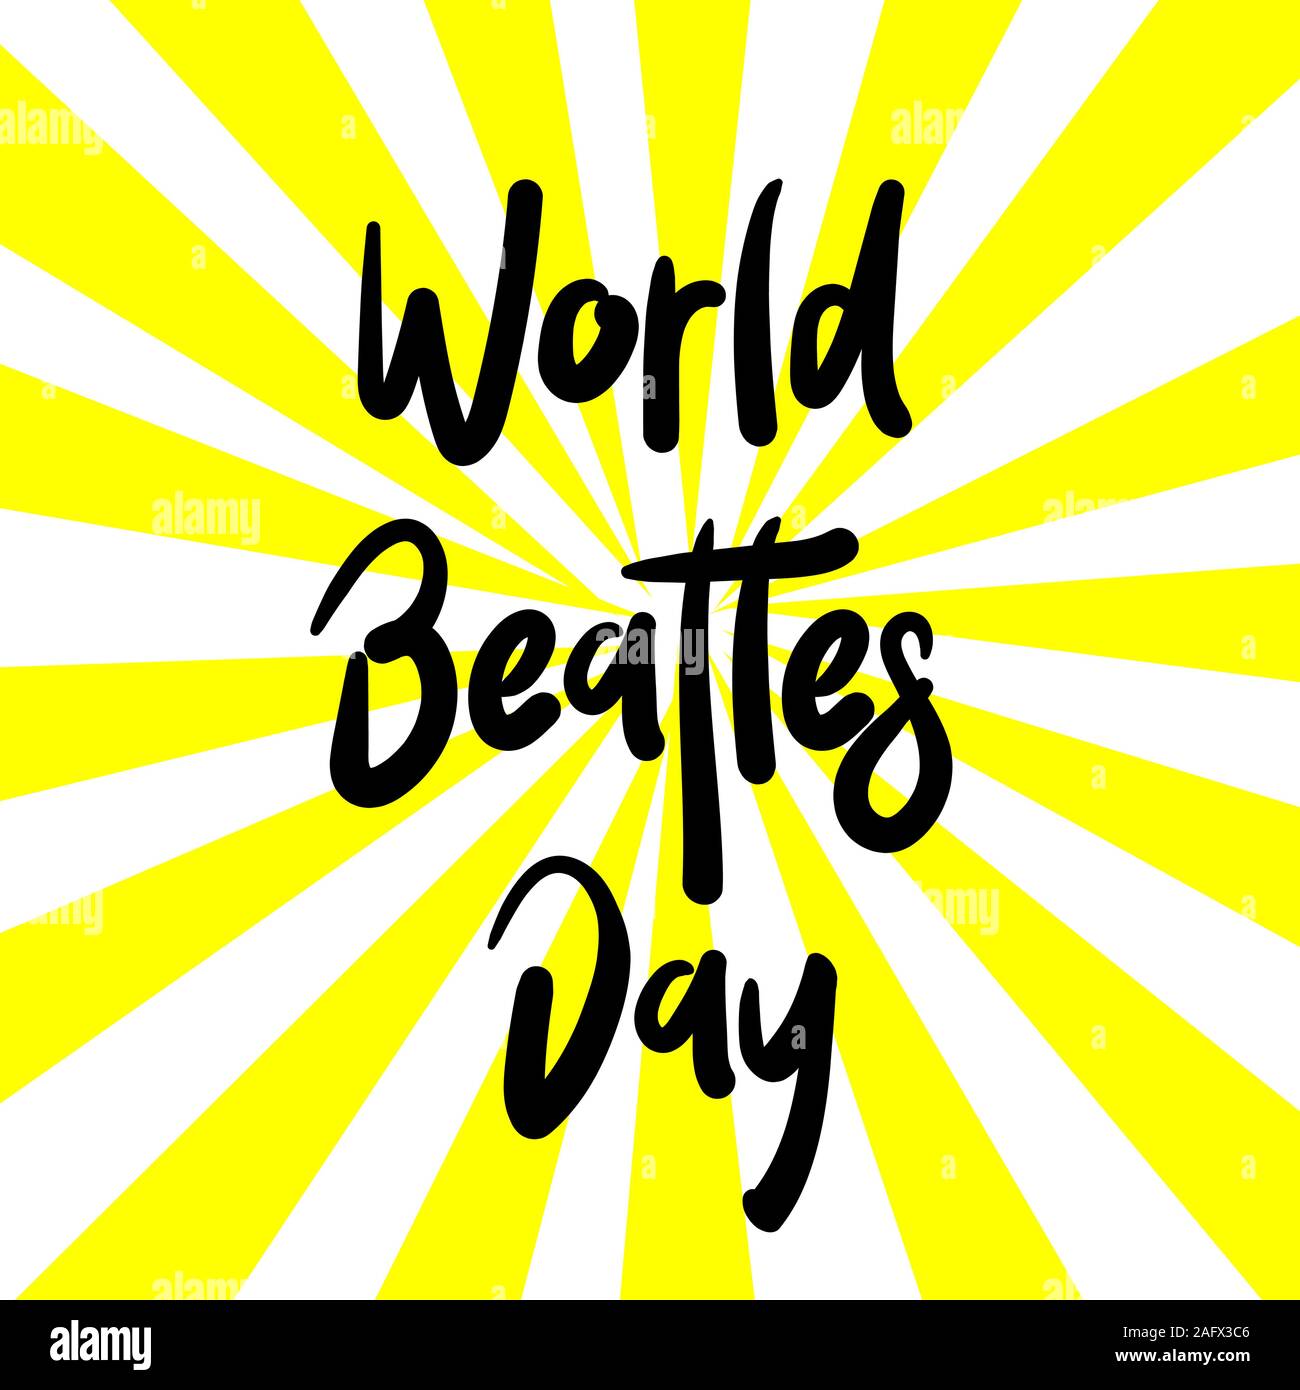 Geburtstag der Beatles, John Lennon, Paul McCartney, George Garnison, Stuart Sutcliff, Pet beste Poster für die Beatles. Gitarre. Rock Musik. Stock Vektor